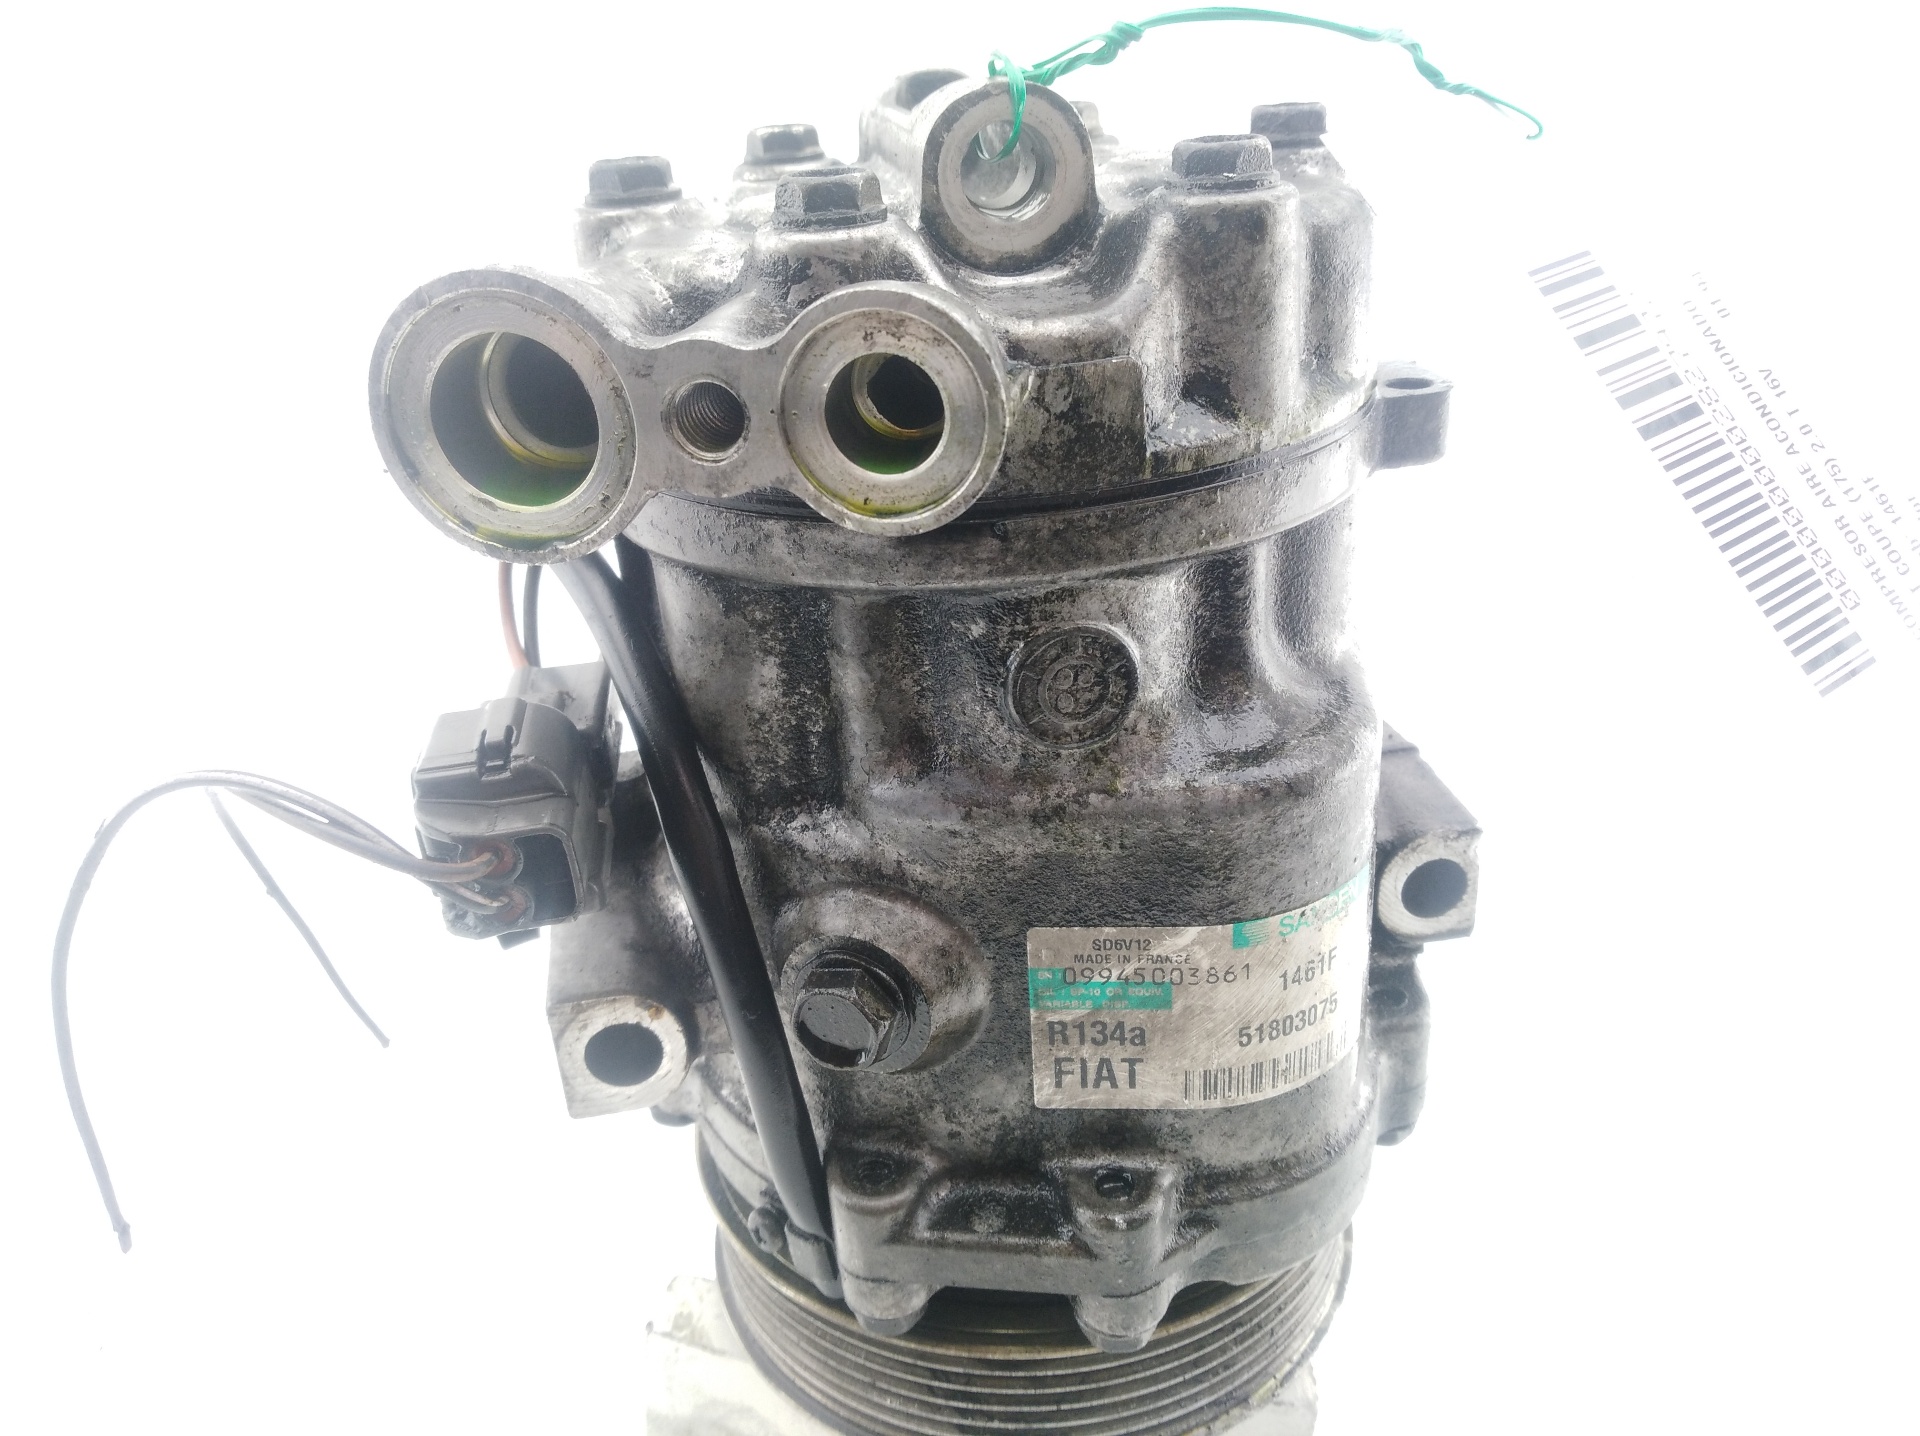 FIAT 1 generation (1993-2000) Air Condition Pump 1461F, 1461F, 1461F 24665834